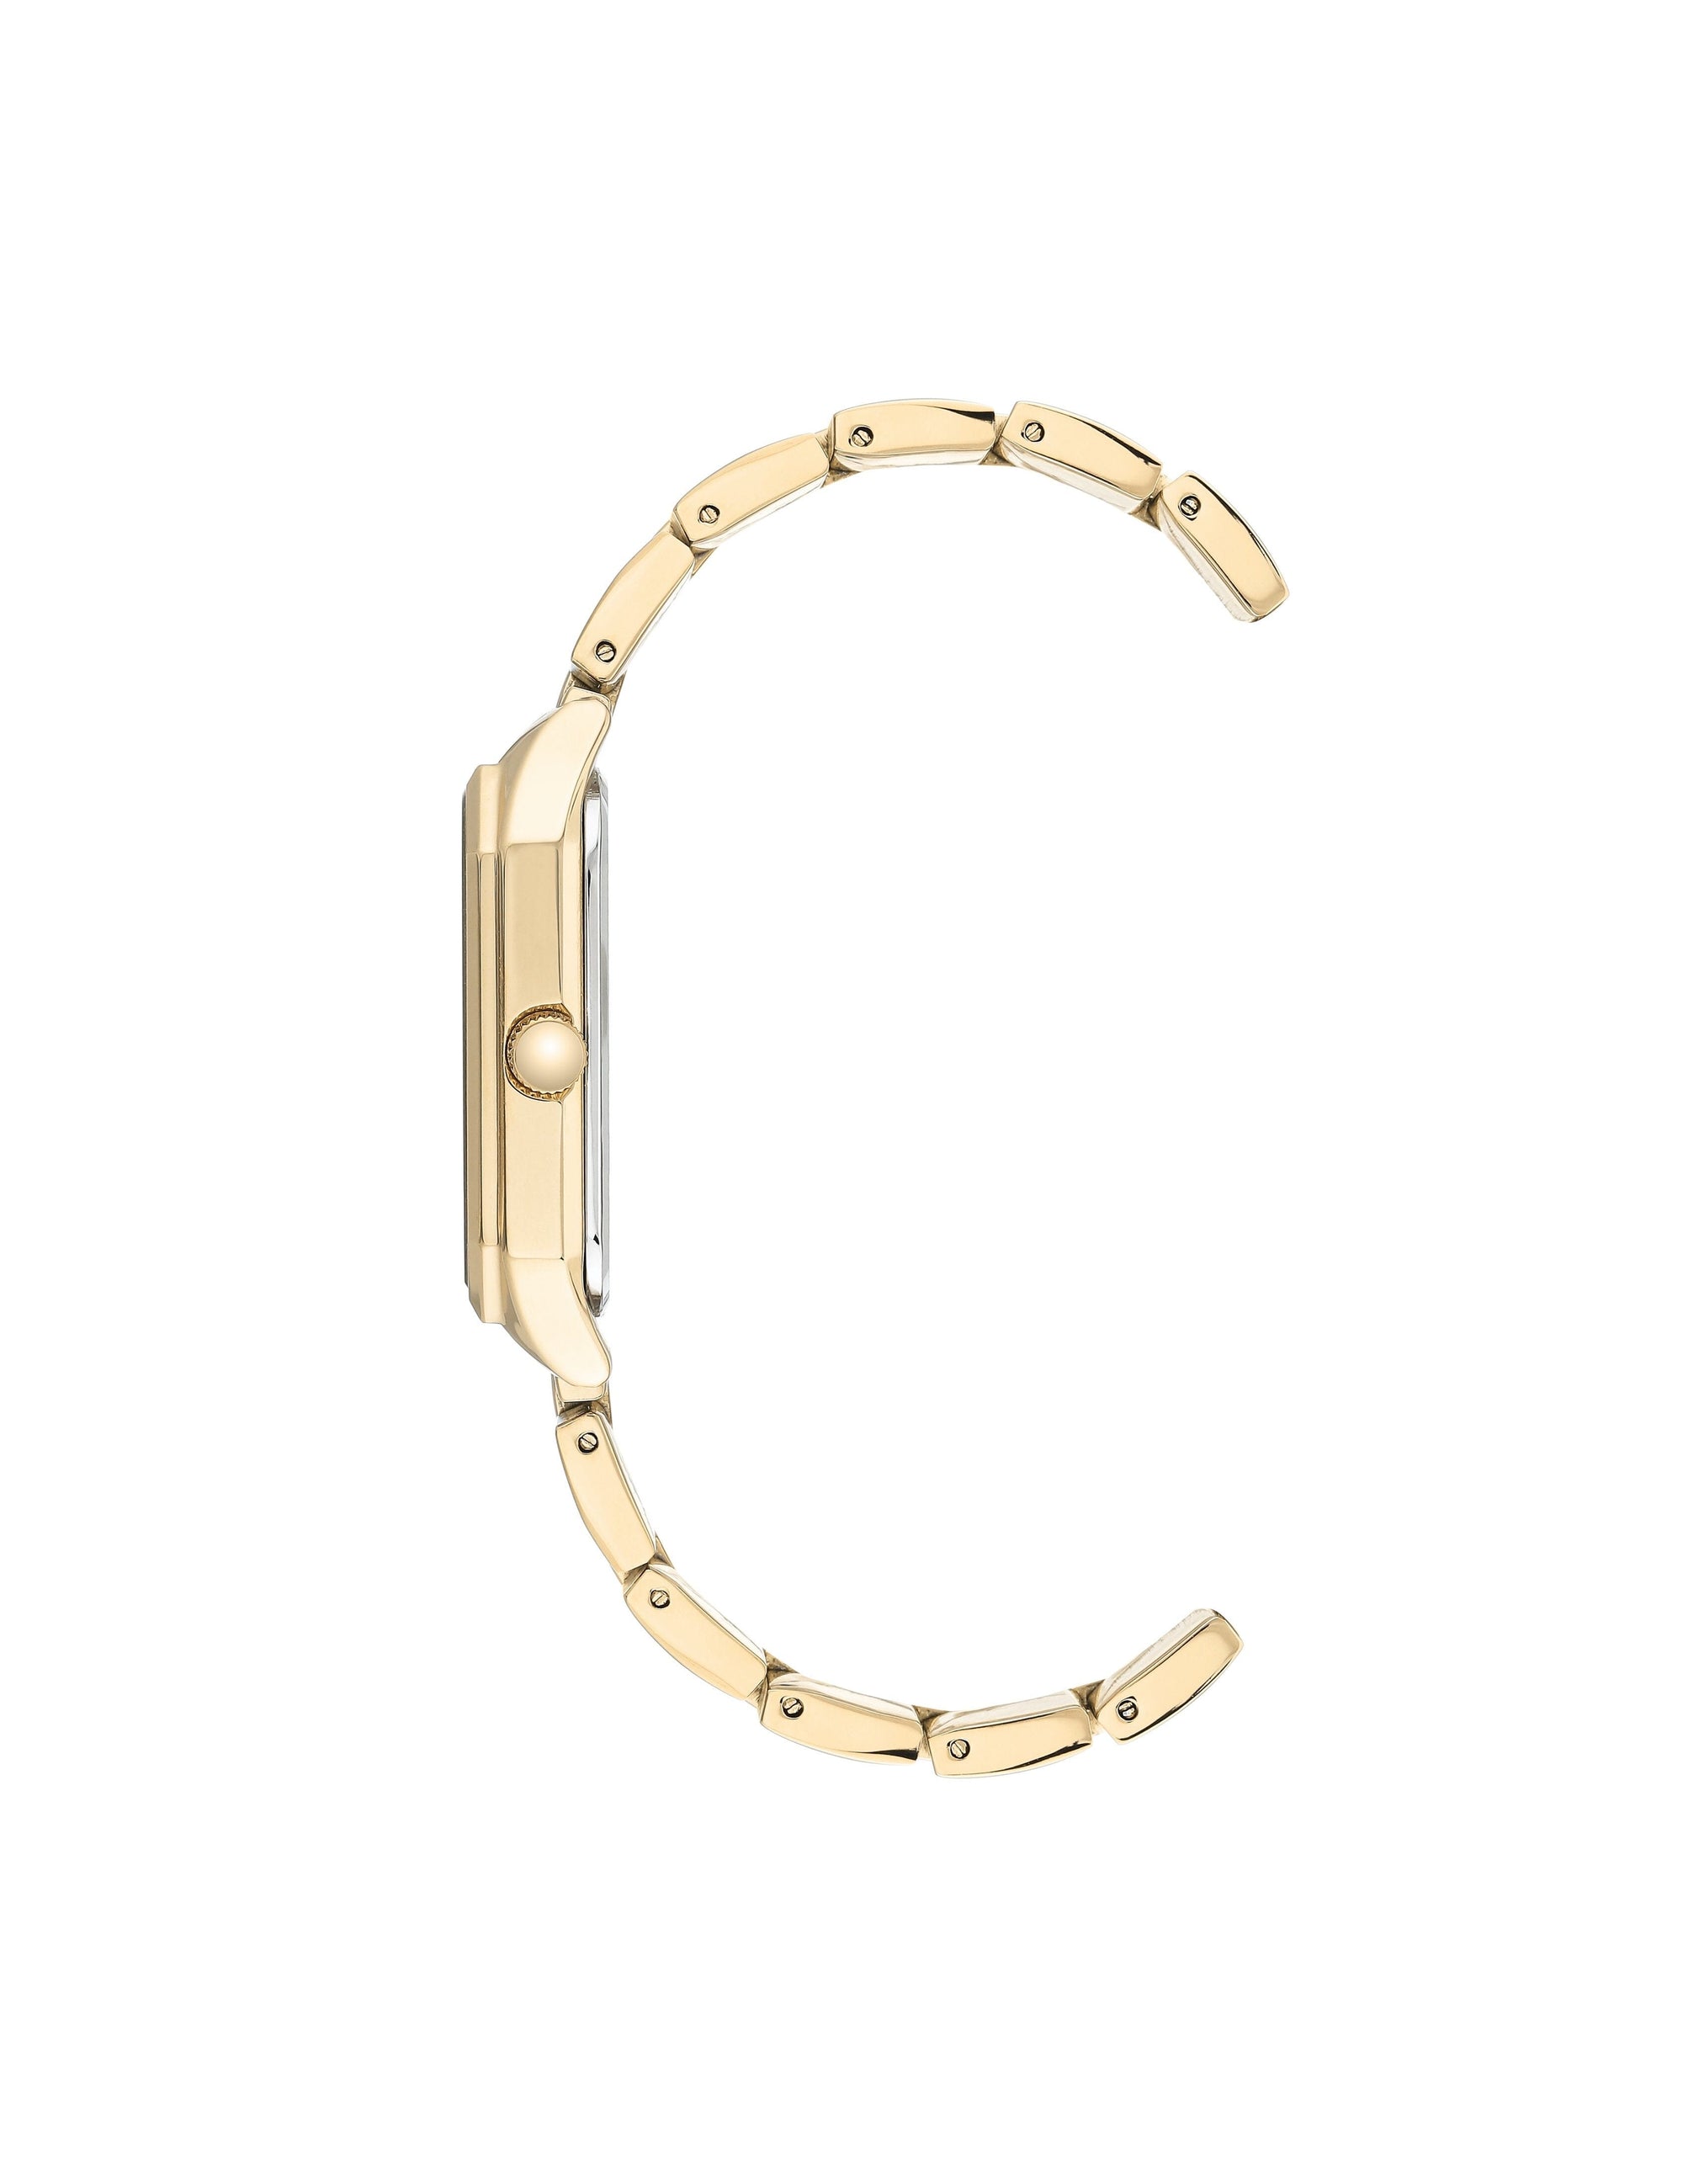 Anne Klein Black&Gold-Tone Octagonal Shaped Metal Bracelet Watch